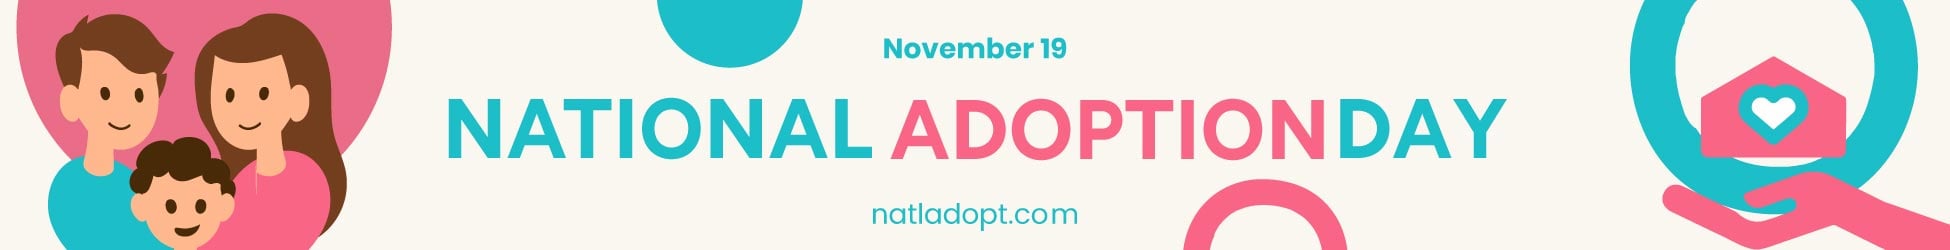 National Adoption Day Website Banner